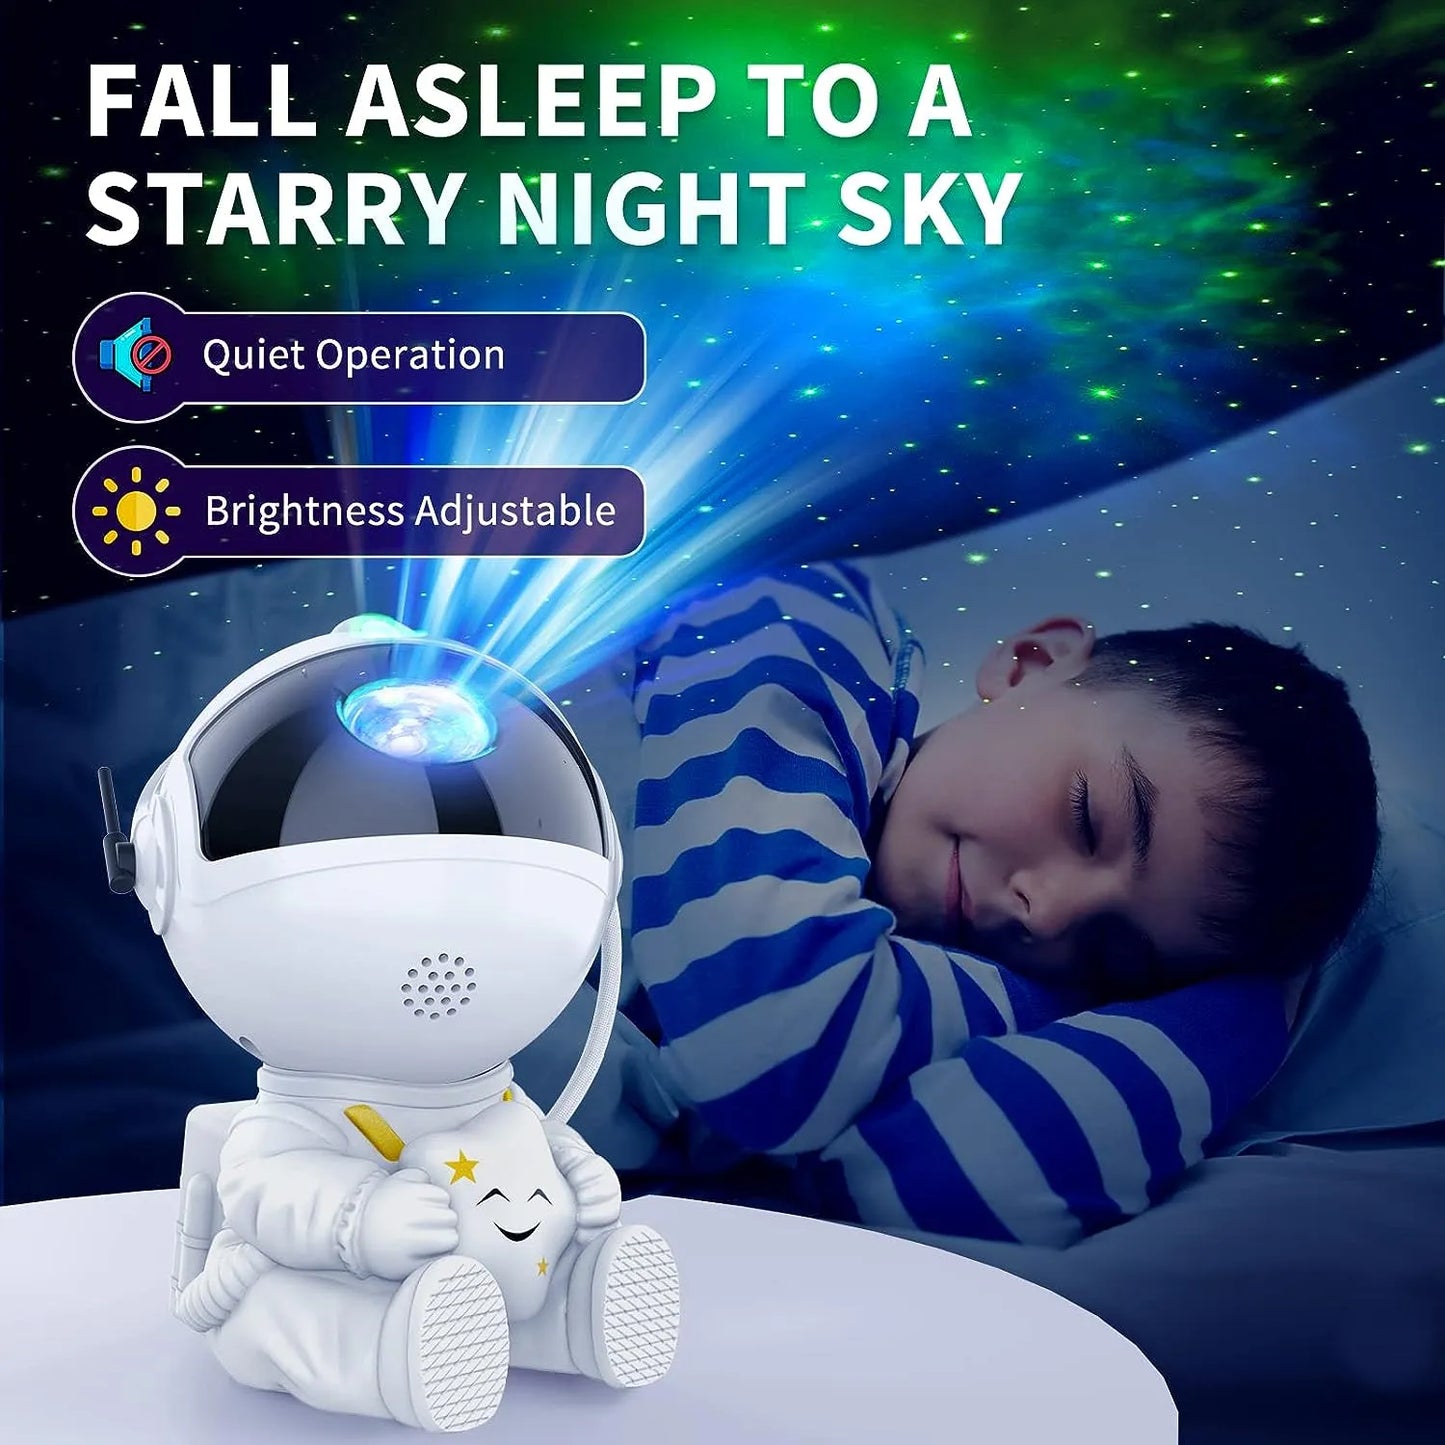 Astronaut Star Projector for Kids, Galaxy Night Light, Bedroom Decor